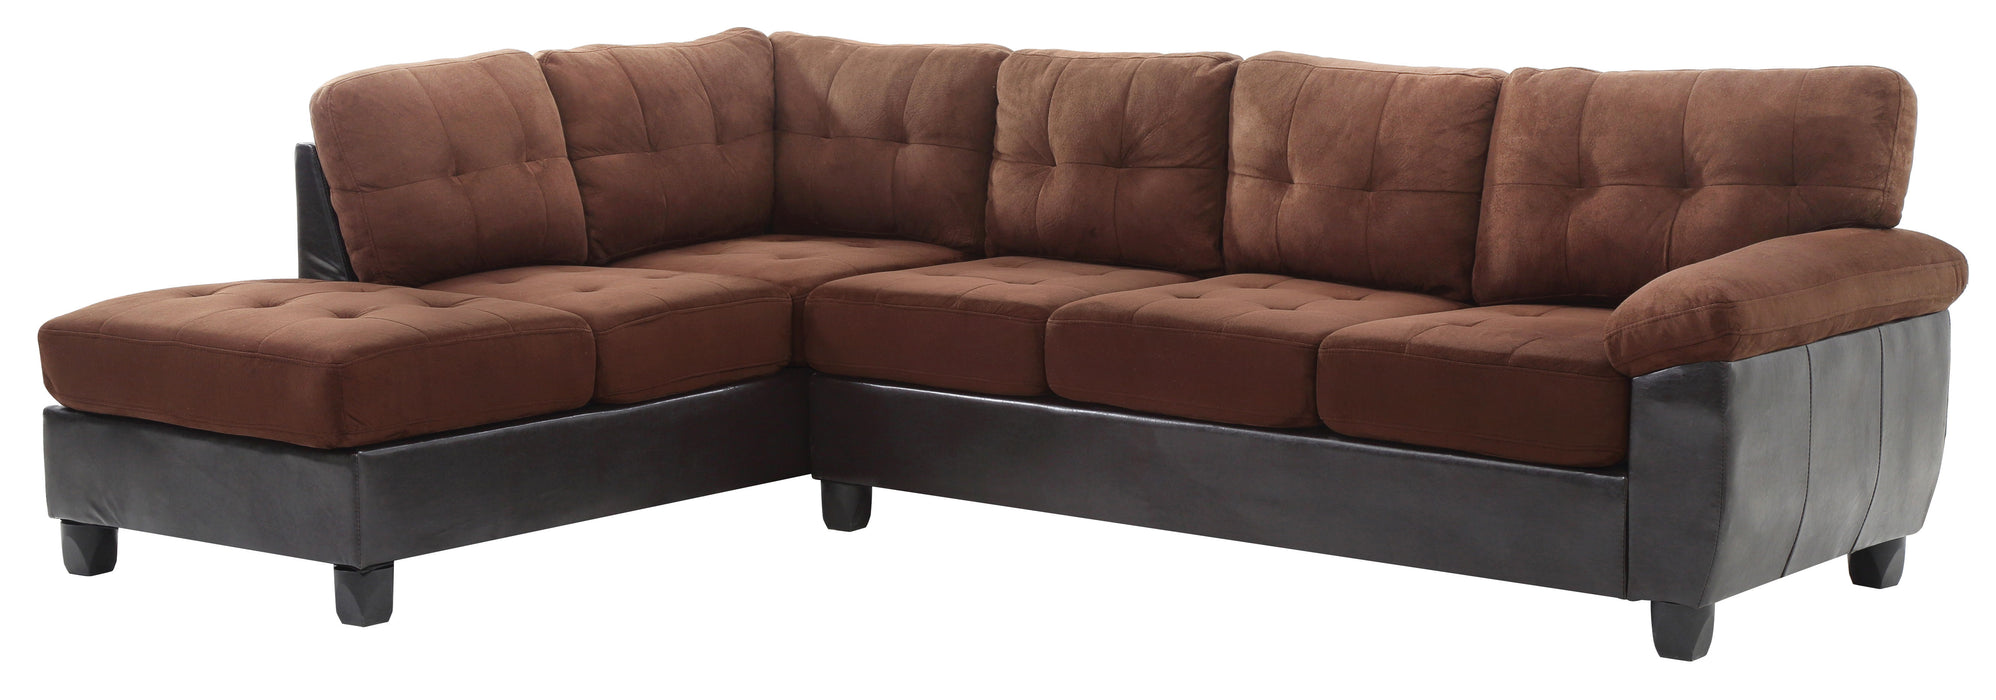 Glory Furniture - Glory Furniture Gallant Sectional, Chocolate - Microfiber